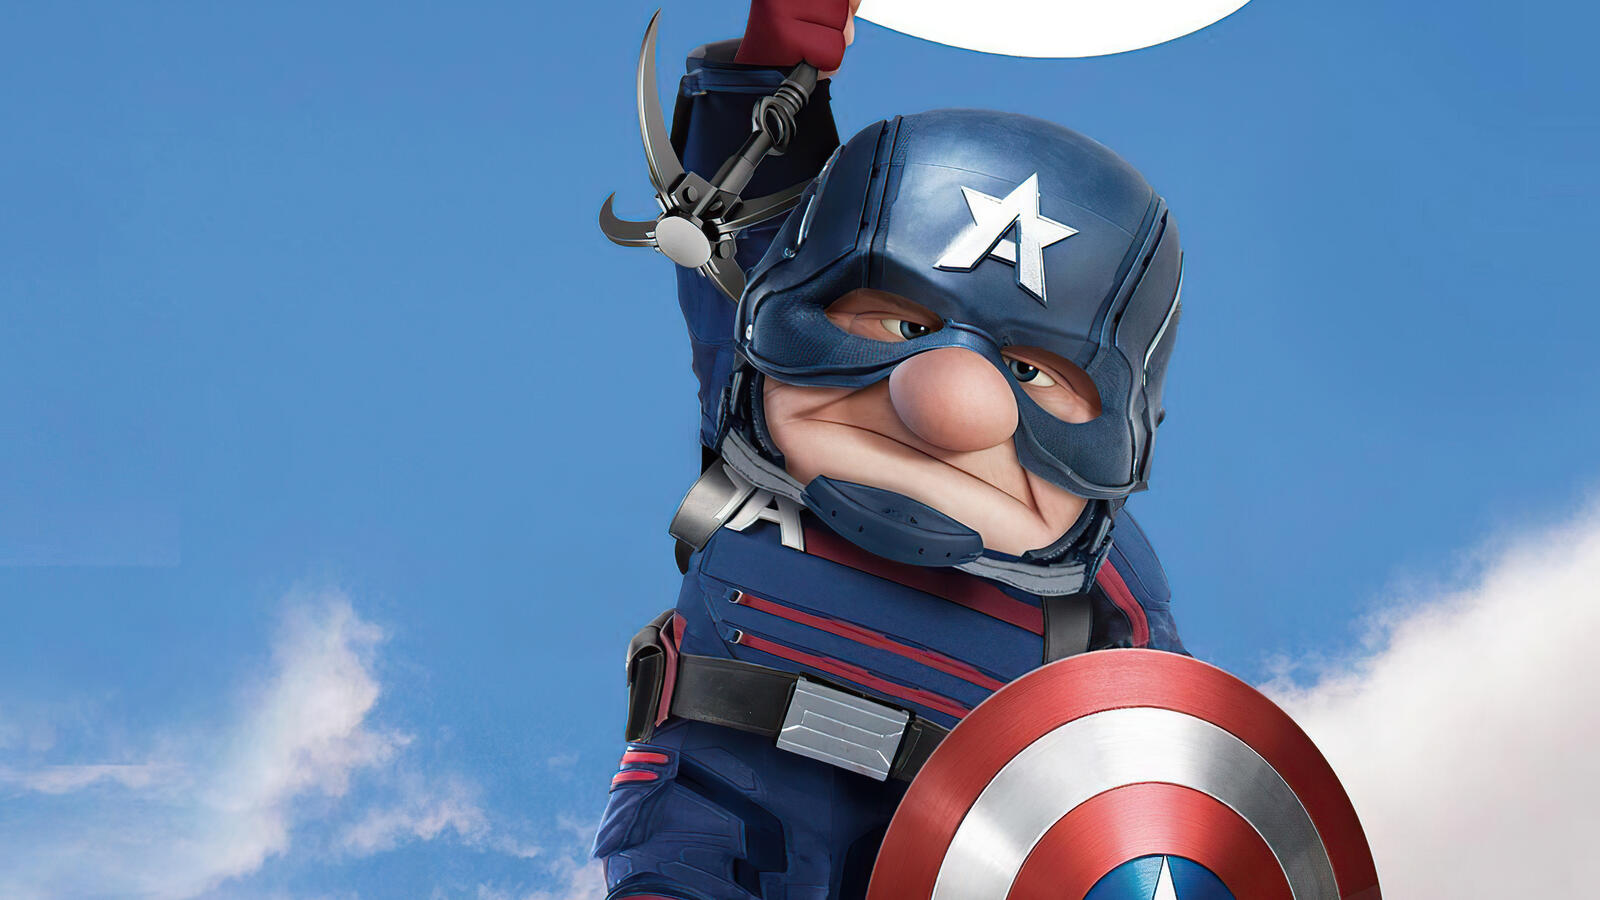 Wallpapers cartoons superheroes captain america on the desktop